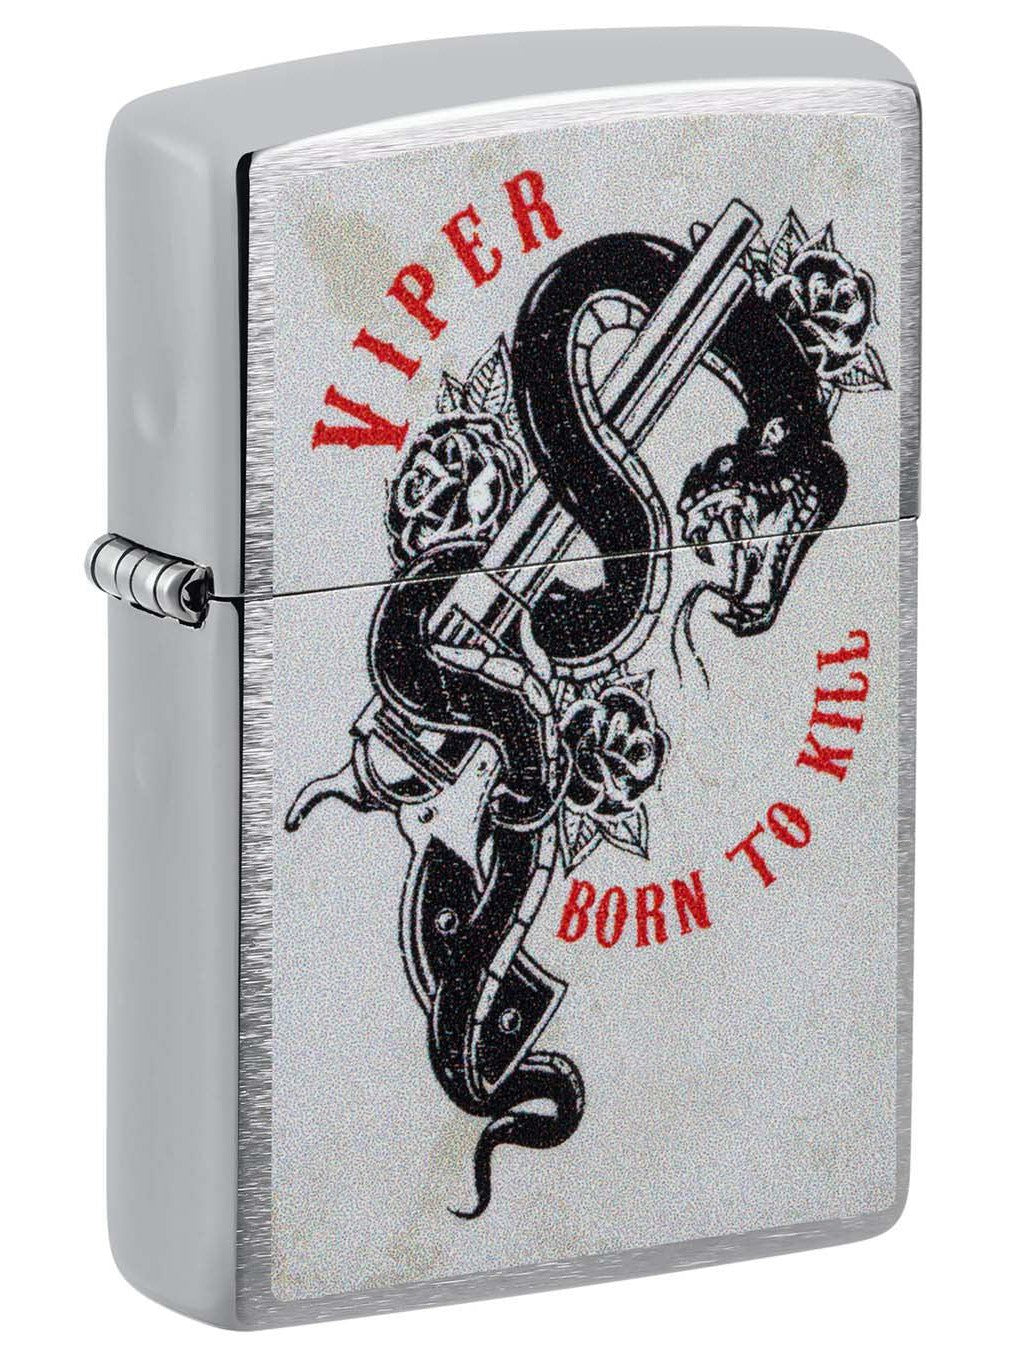 Zippo Lighter: Viper Snake, Born To Kill - Brushed Chrome 48650